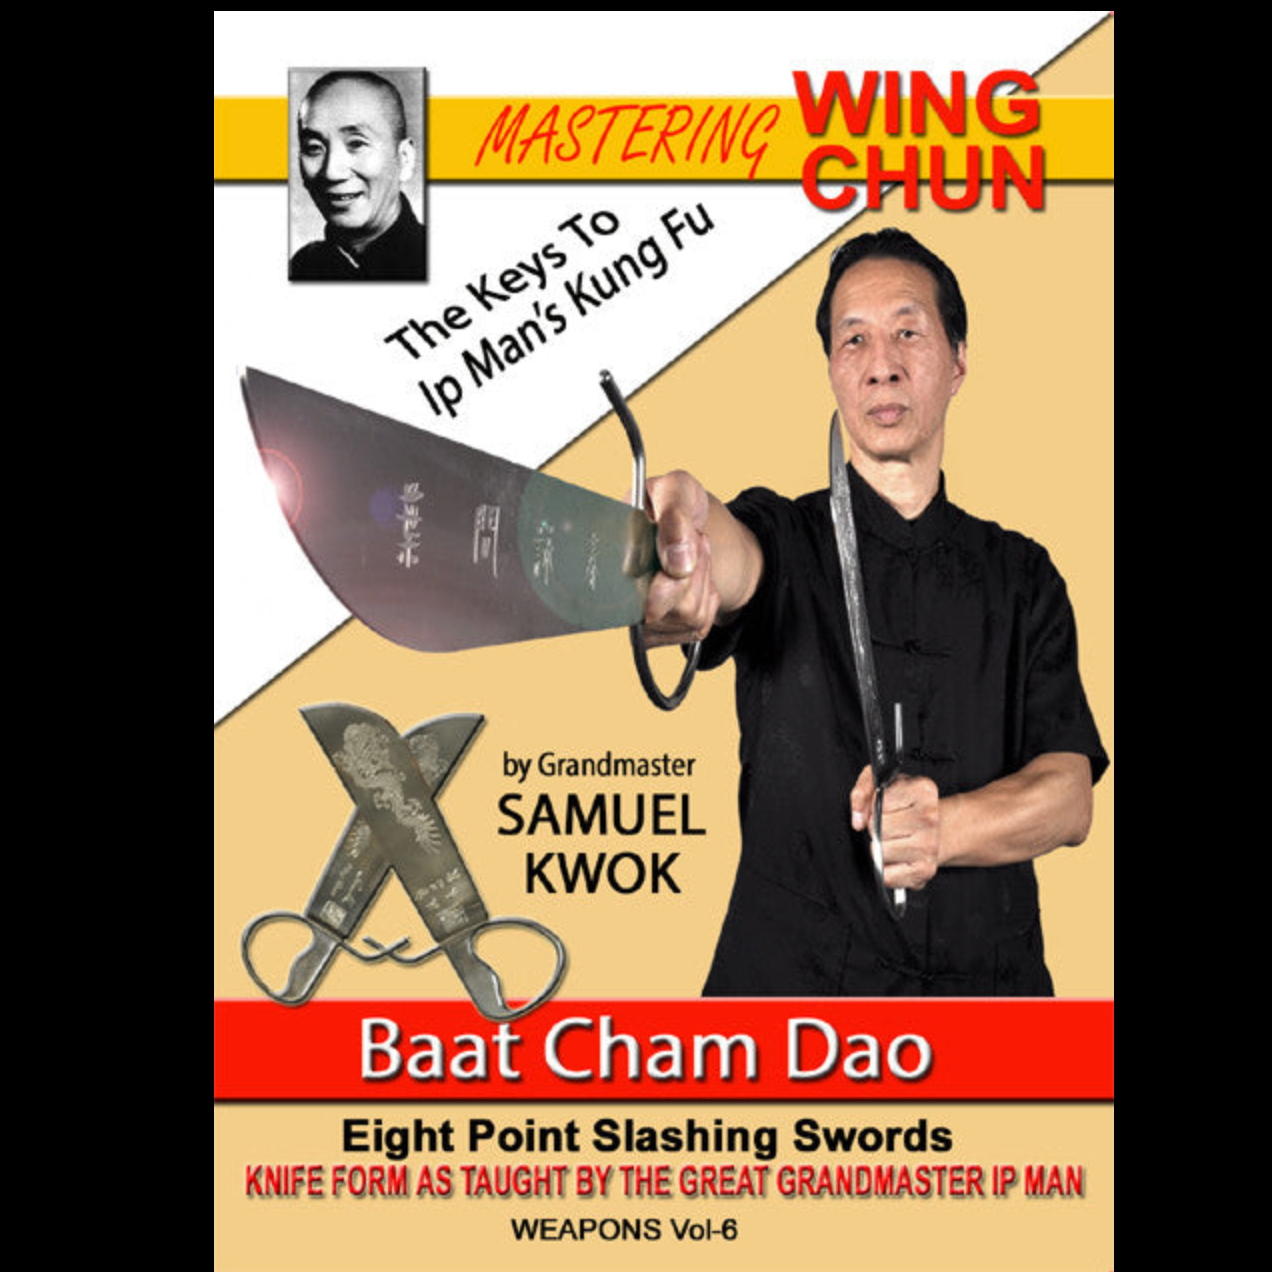 Kung Fu Slashing Swords de Ip Man con Samuel Kwok (bajo demanda)